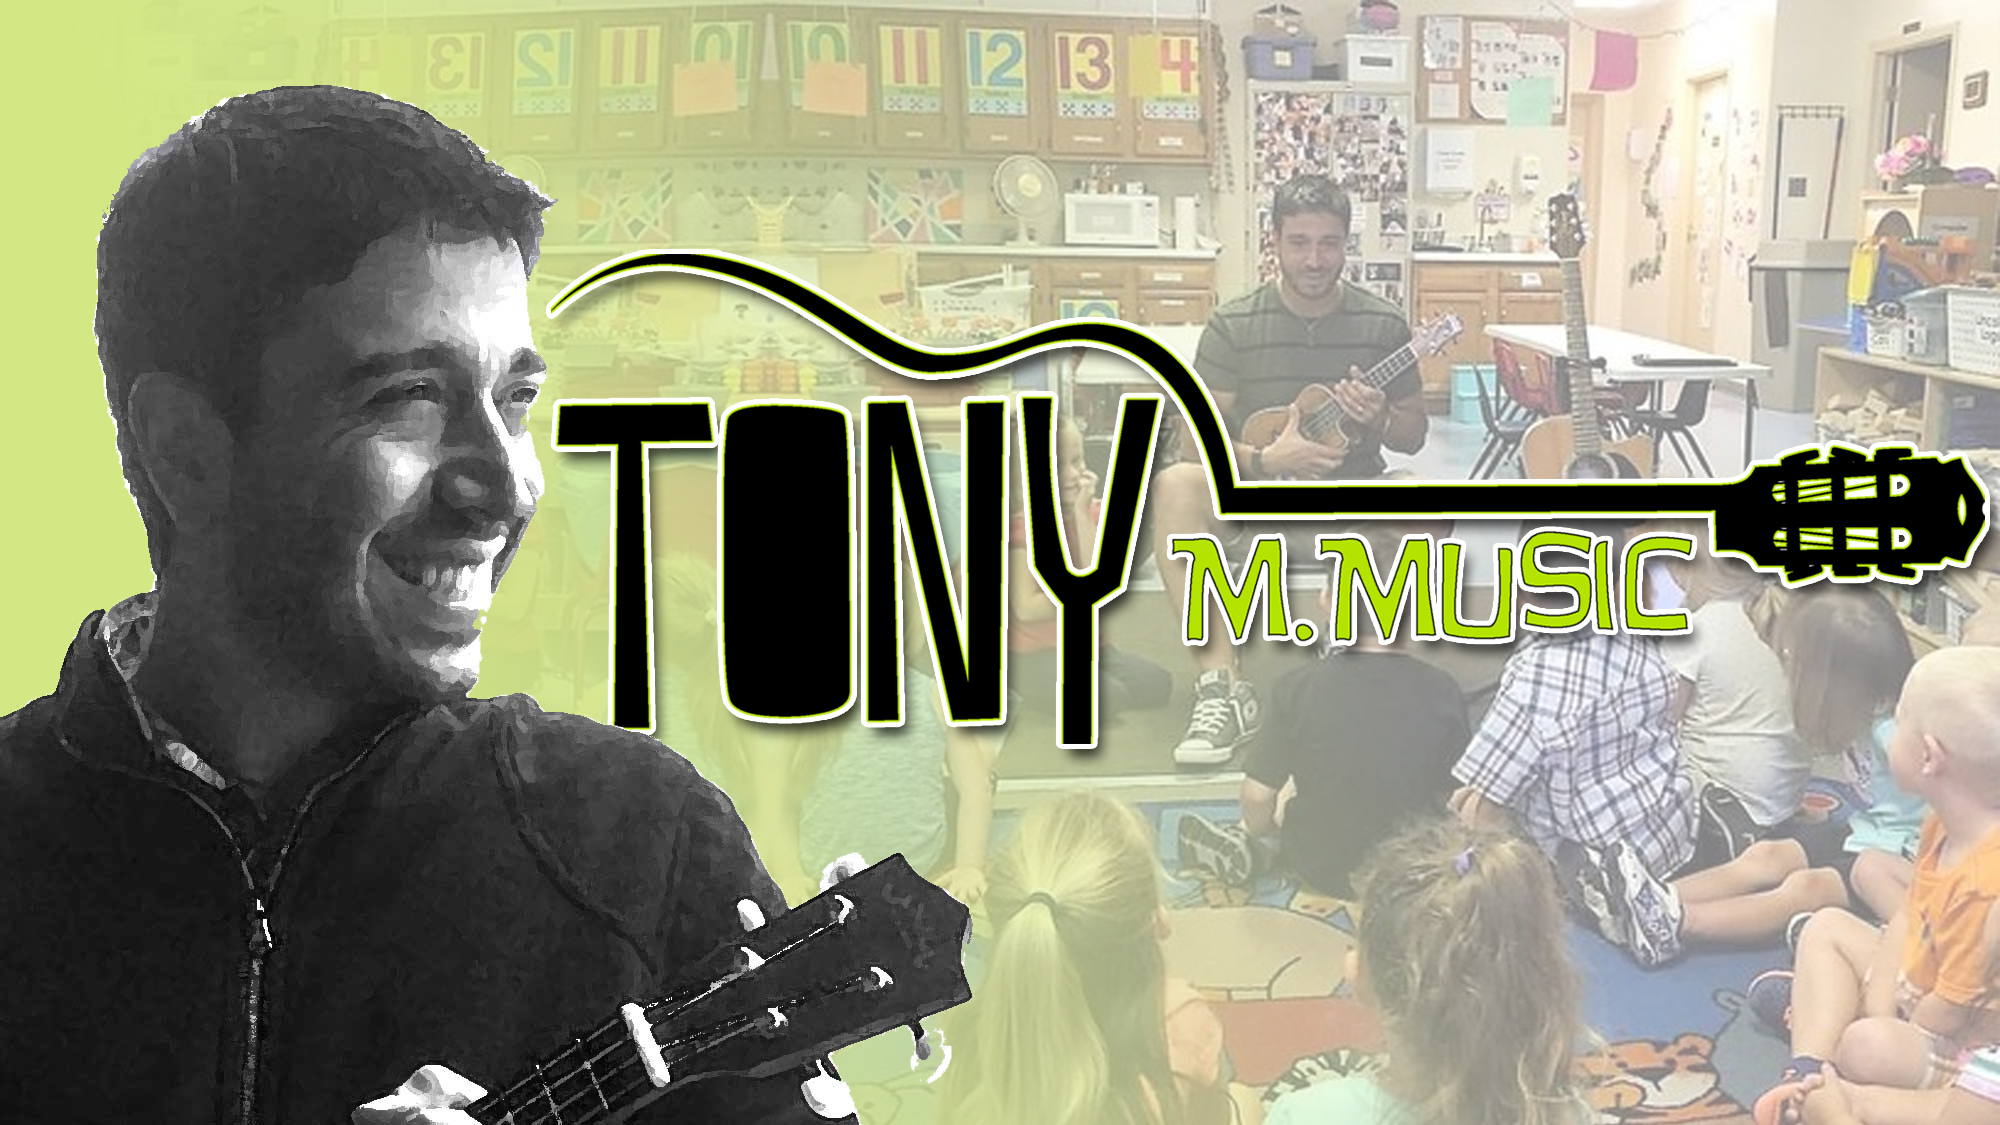 Tony M. Music